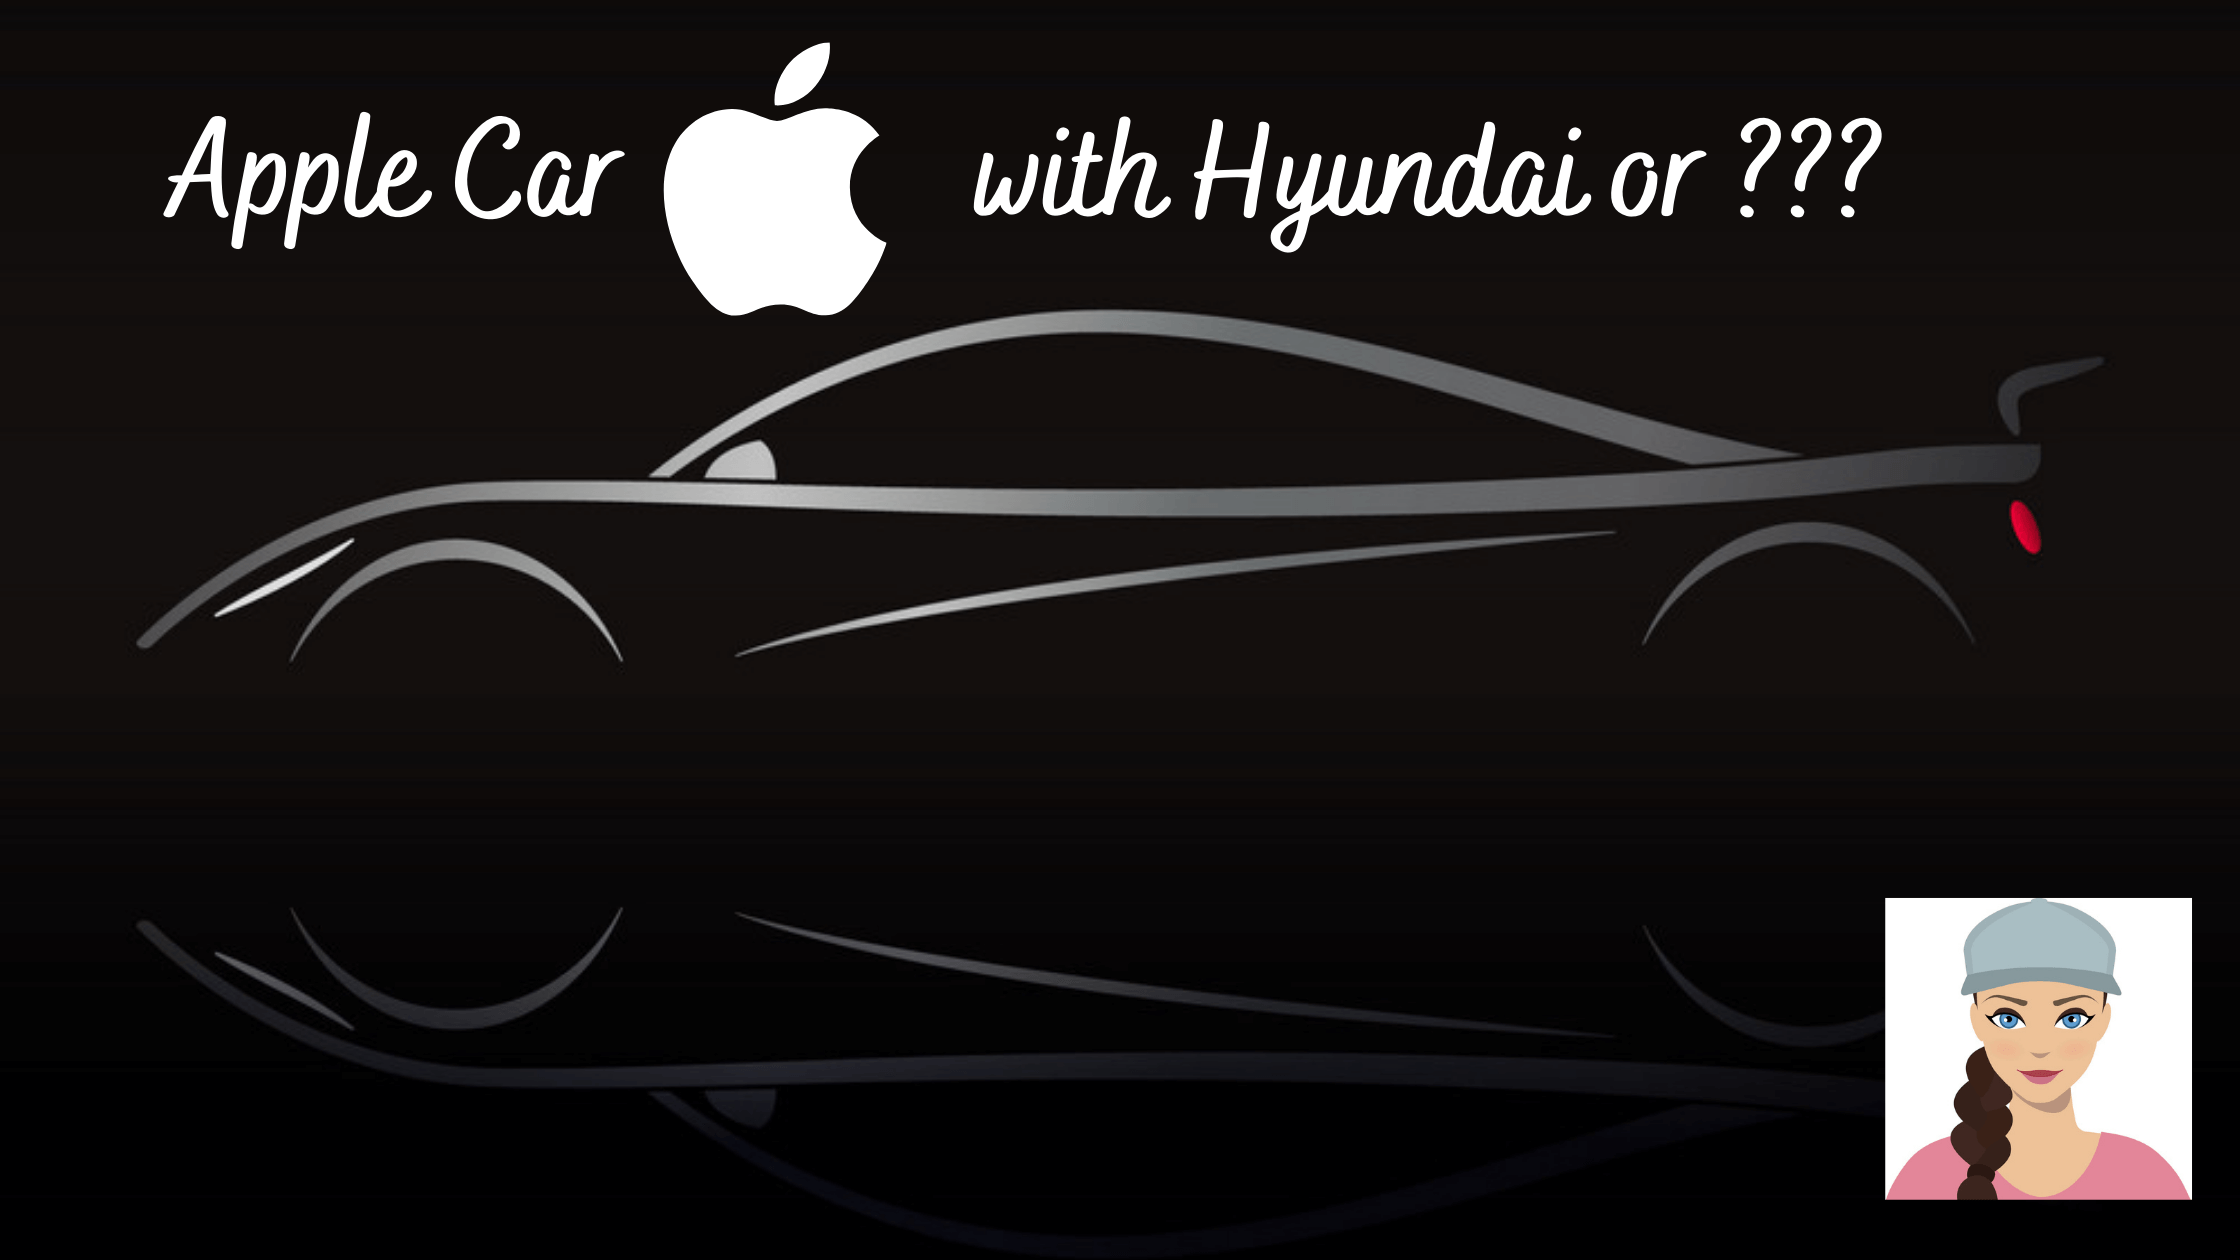 Apple Car, Hyundai and robotaxis